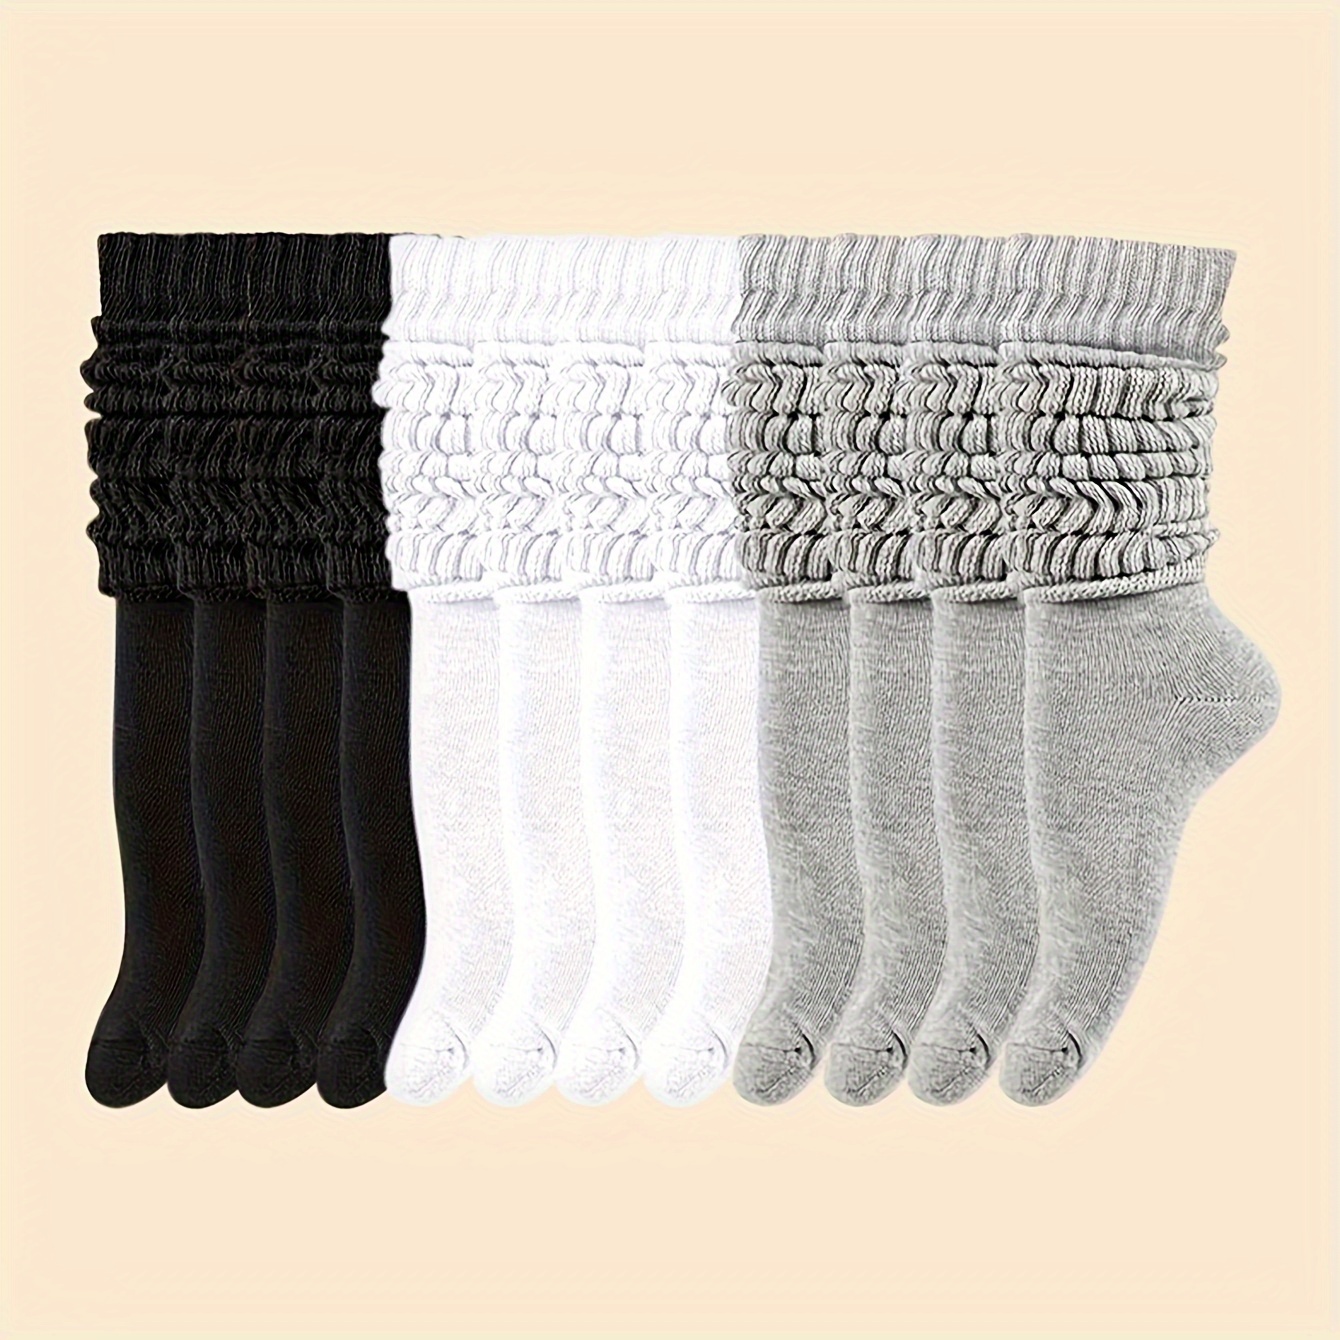 

6 Pairs Solid Knitted Socks, Simple & Comfy Slouchy Socks, Women's Stockings & Hosiery